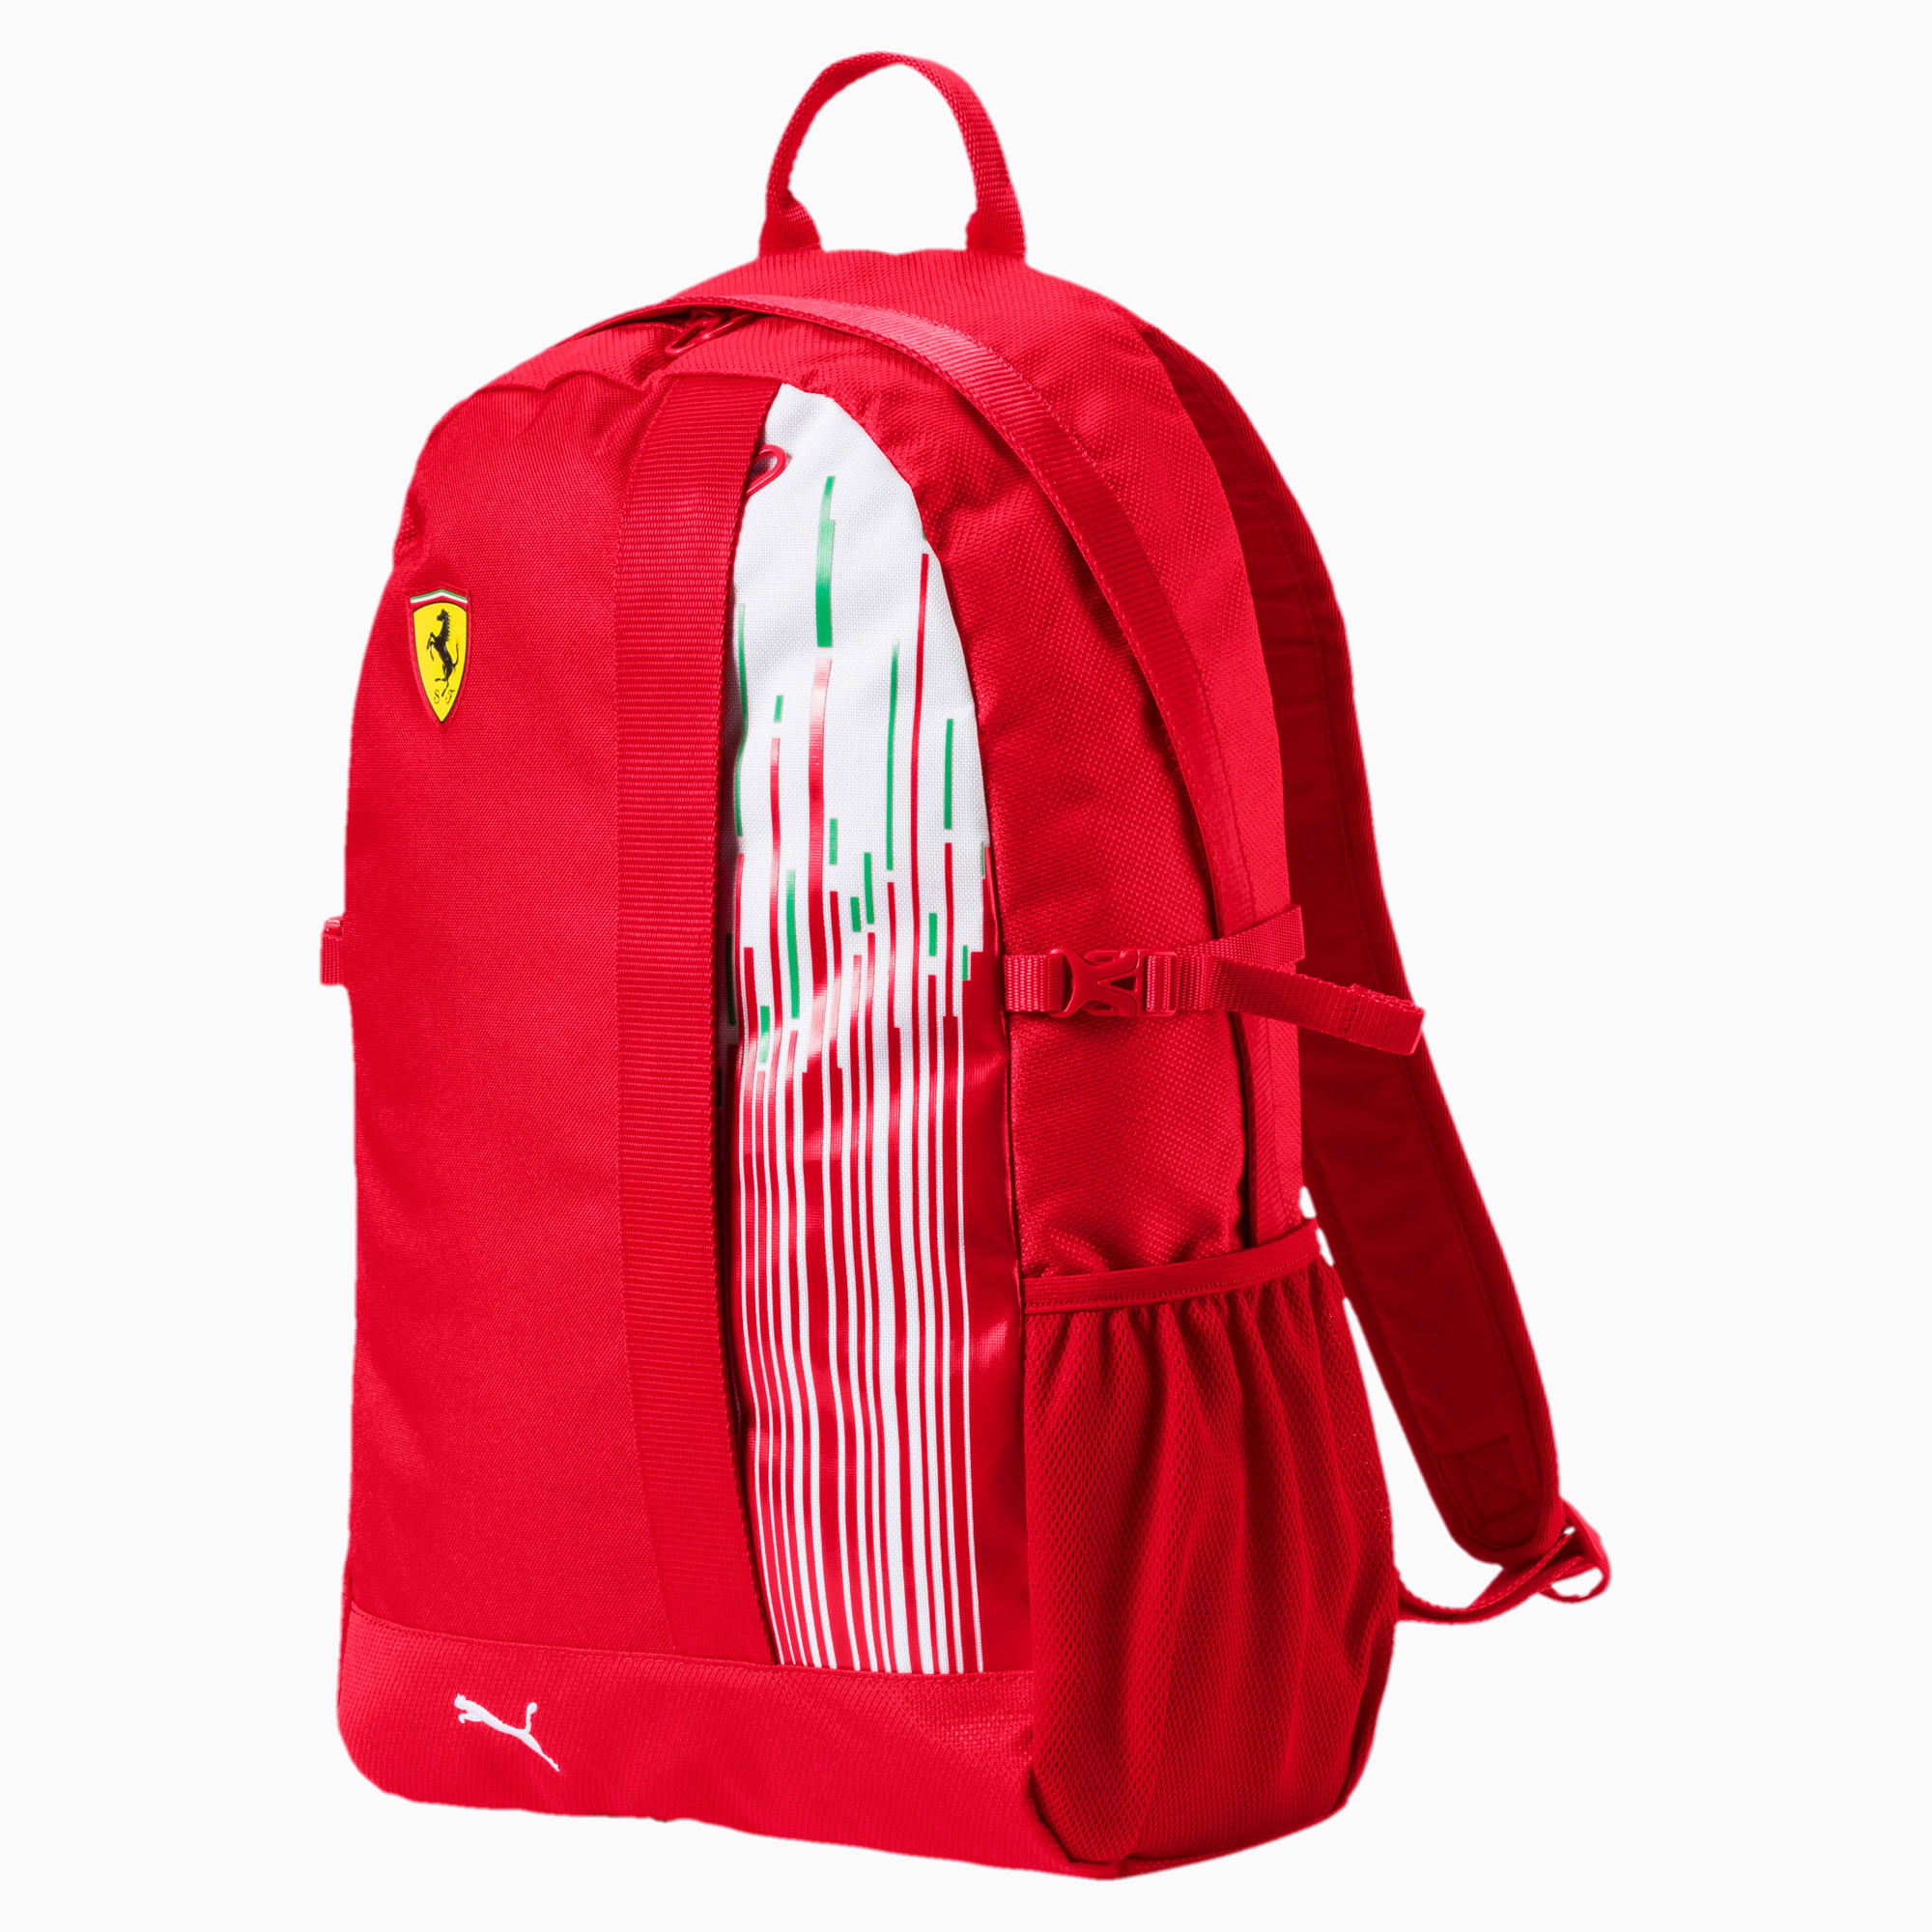 puma ferrari backpack red